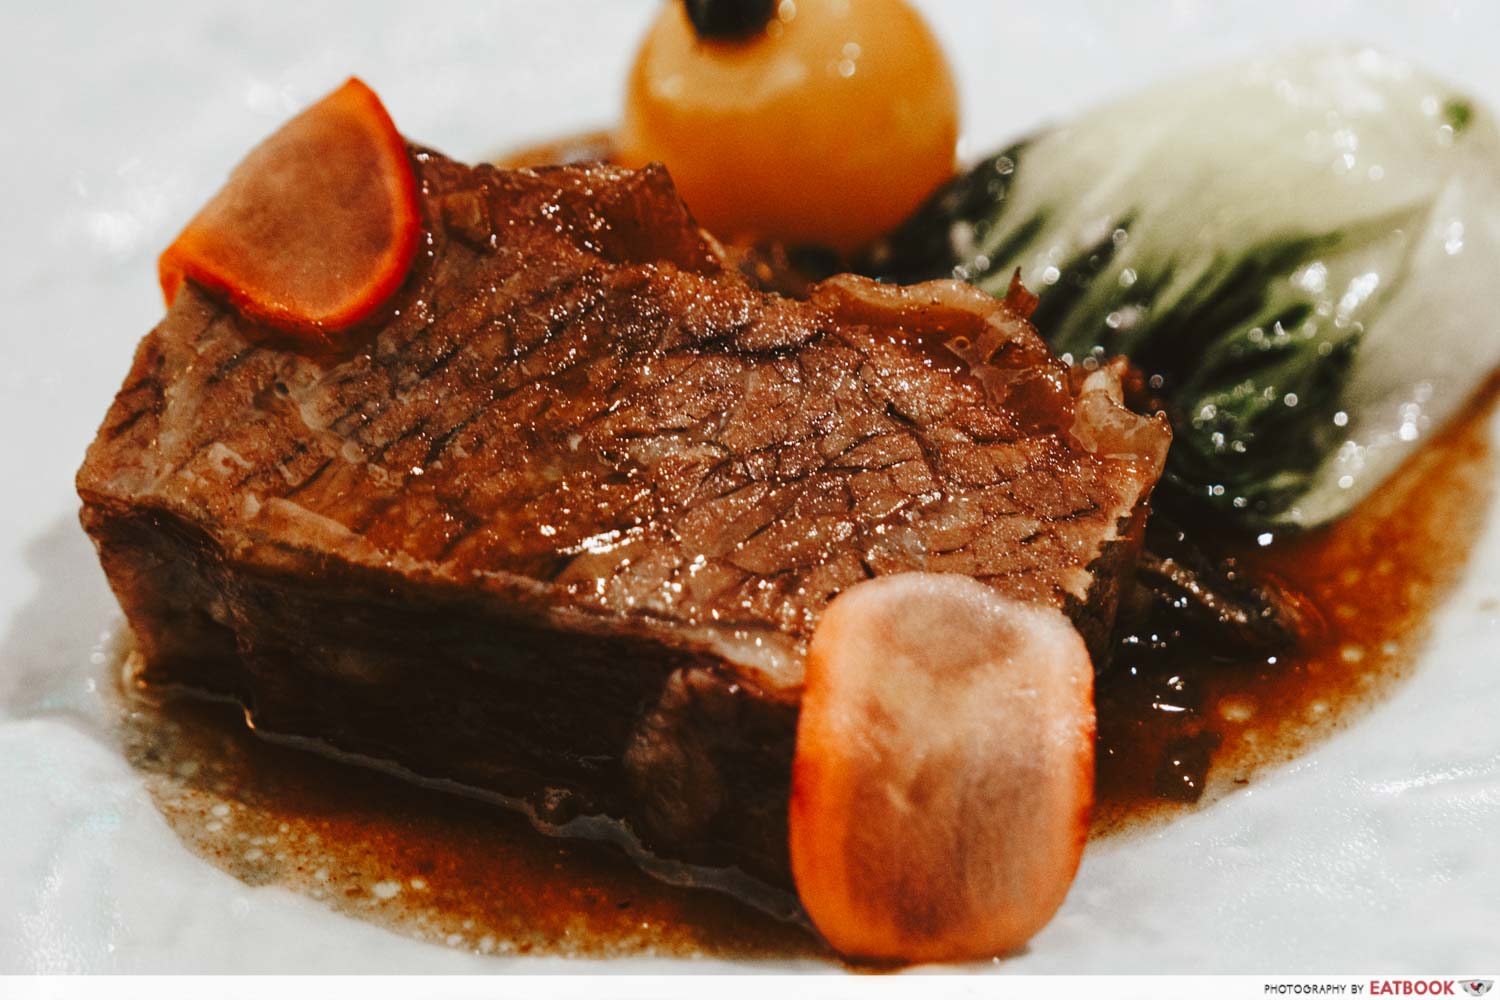 AquaMarine Hong Kong Buffet - Braised Beef Rib With Mui Choy